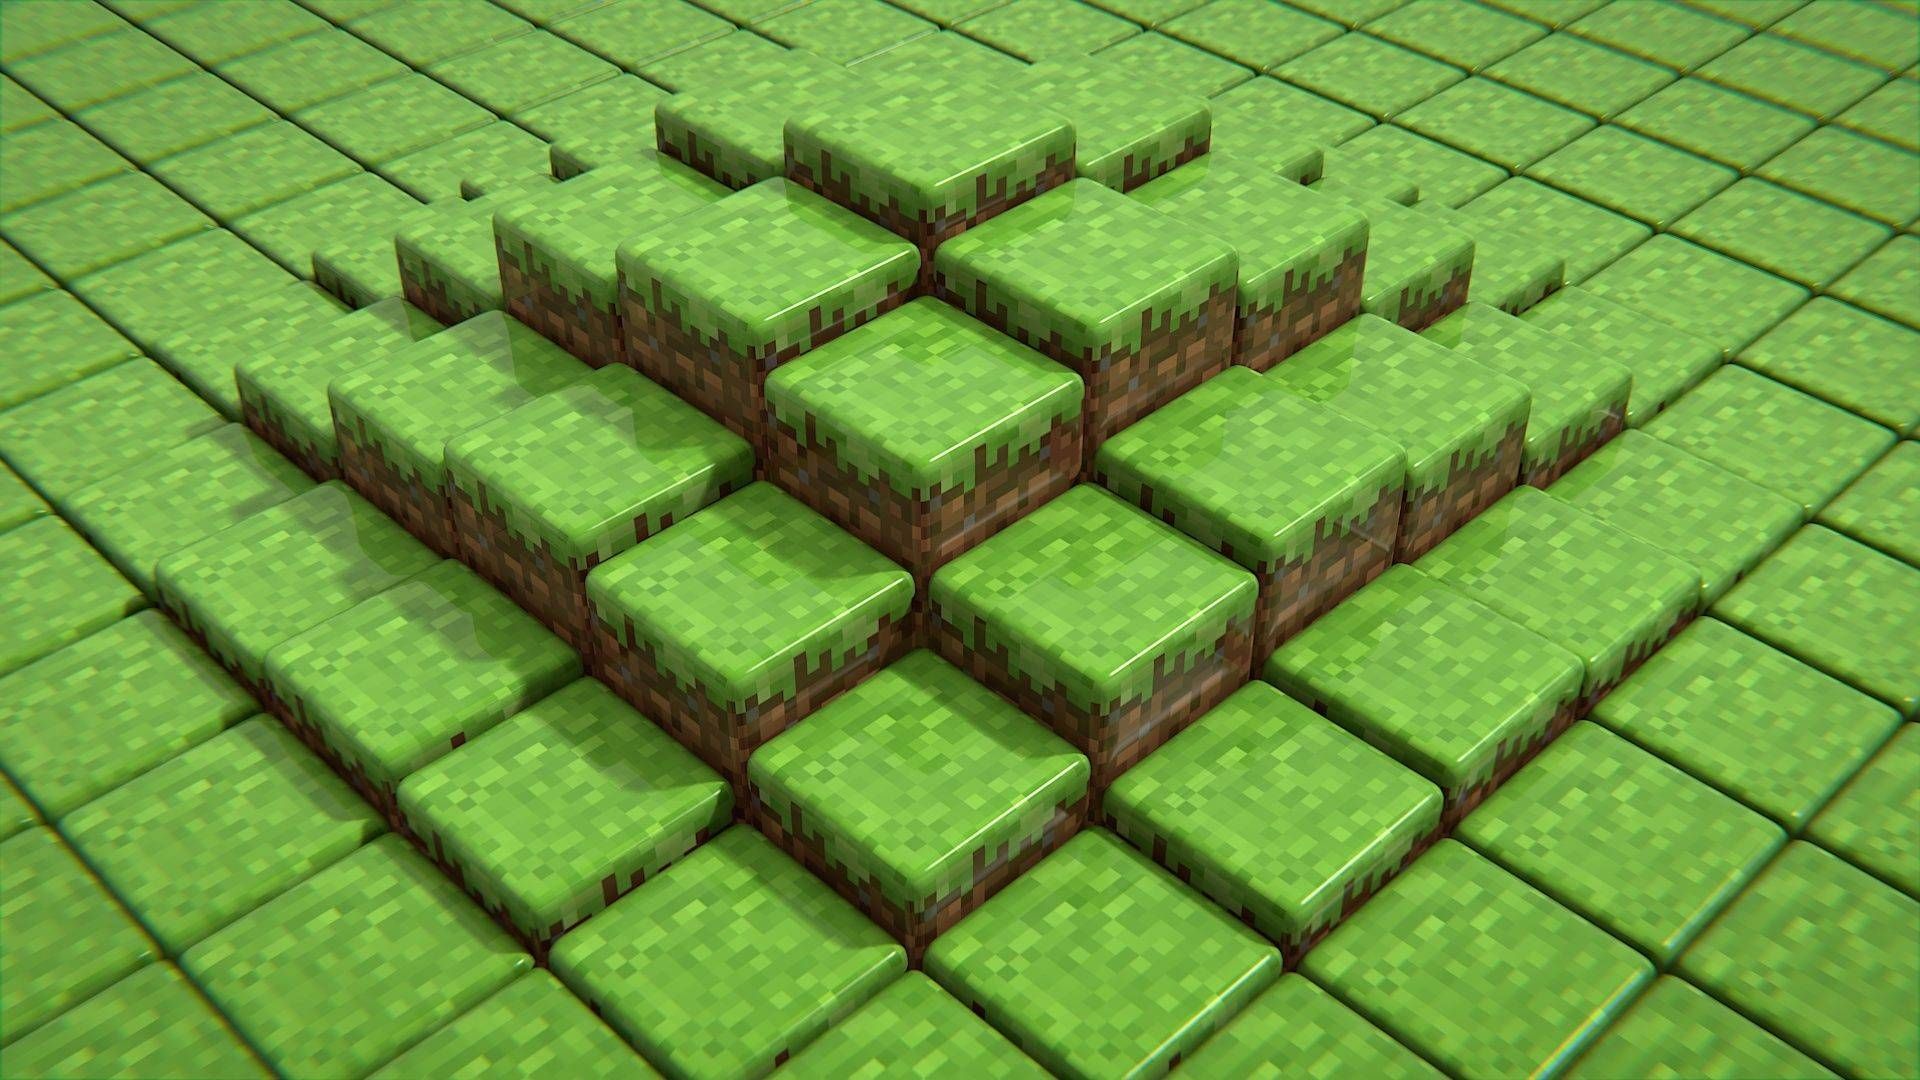 Minecraft grass blocks. Minecraft wallpaper, Minecraft, Game based learning